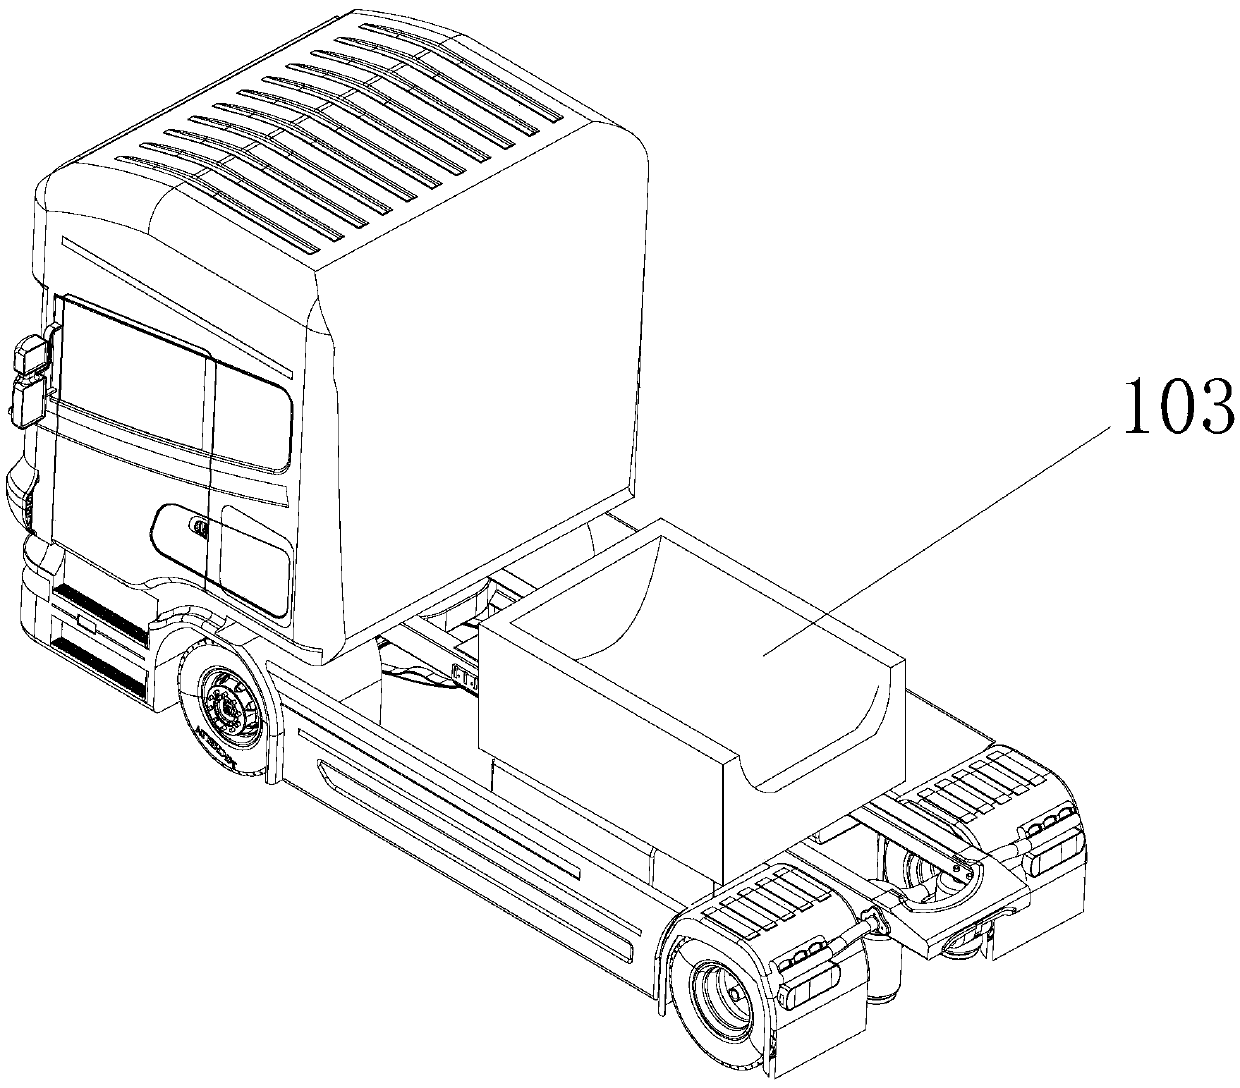 Gooseneck module device of covariant module-separation-and reunion type semi-trailer